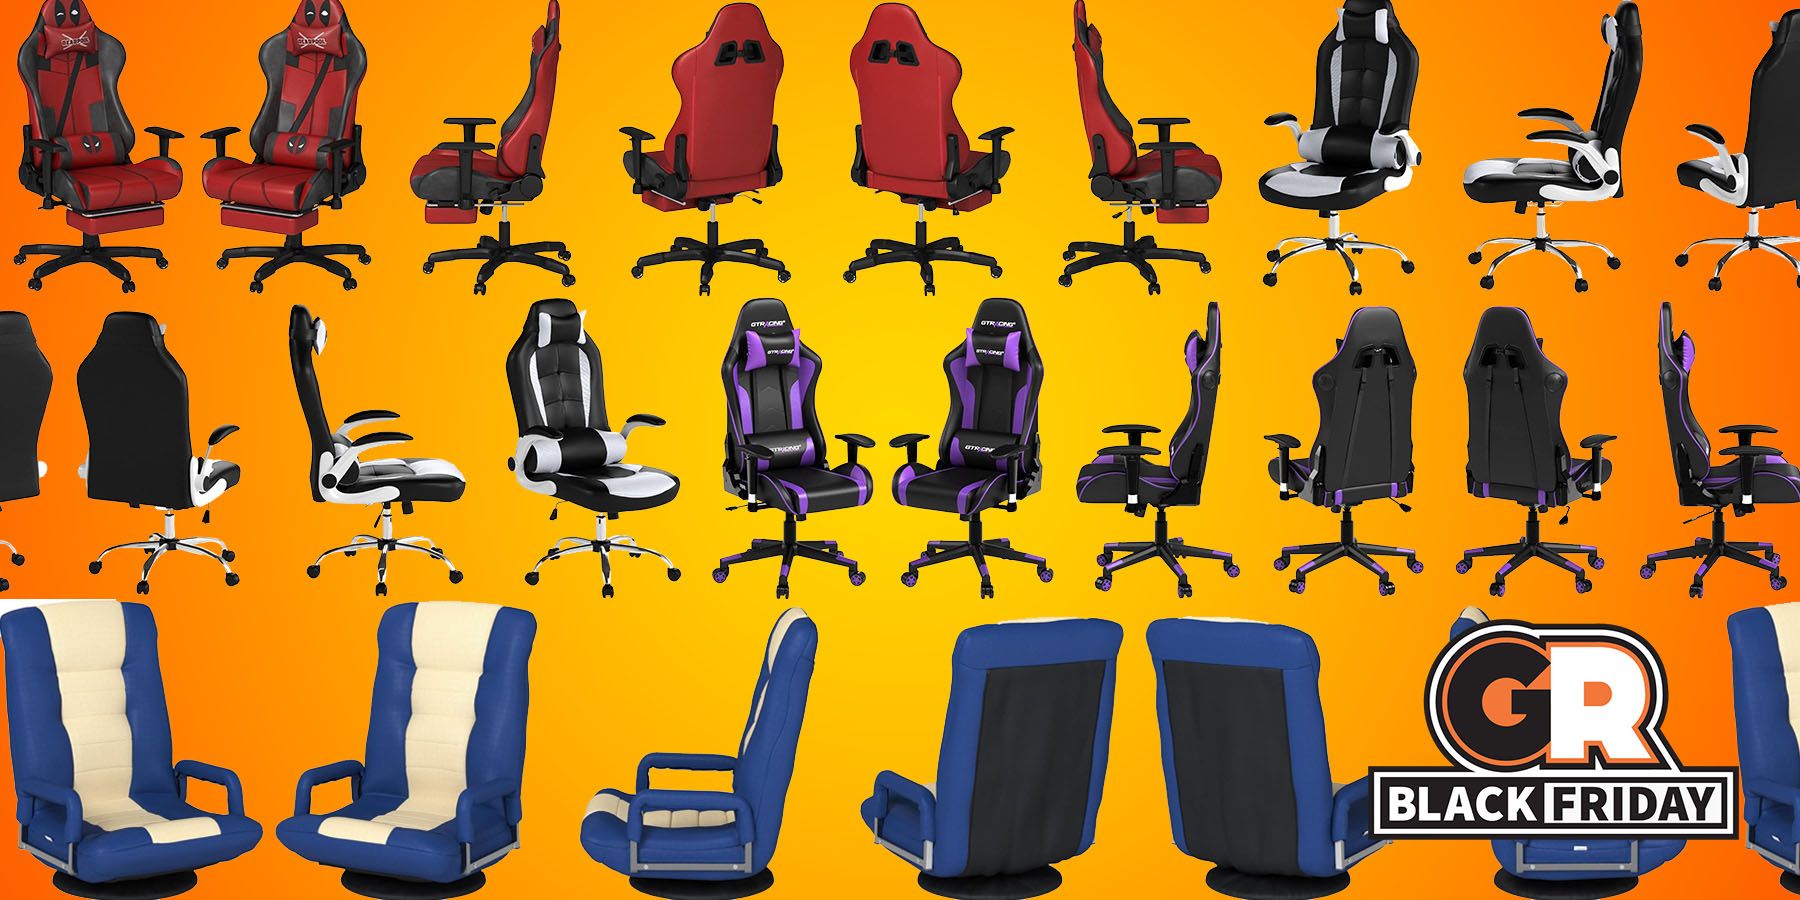 secretlab klim marvel deadpool zeanus gtracing gaming chairs gamerant amazon black friday deals feature